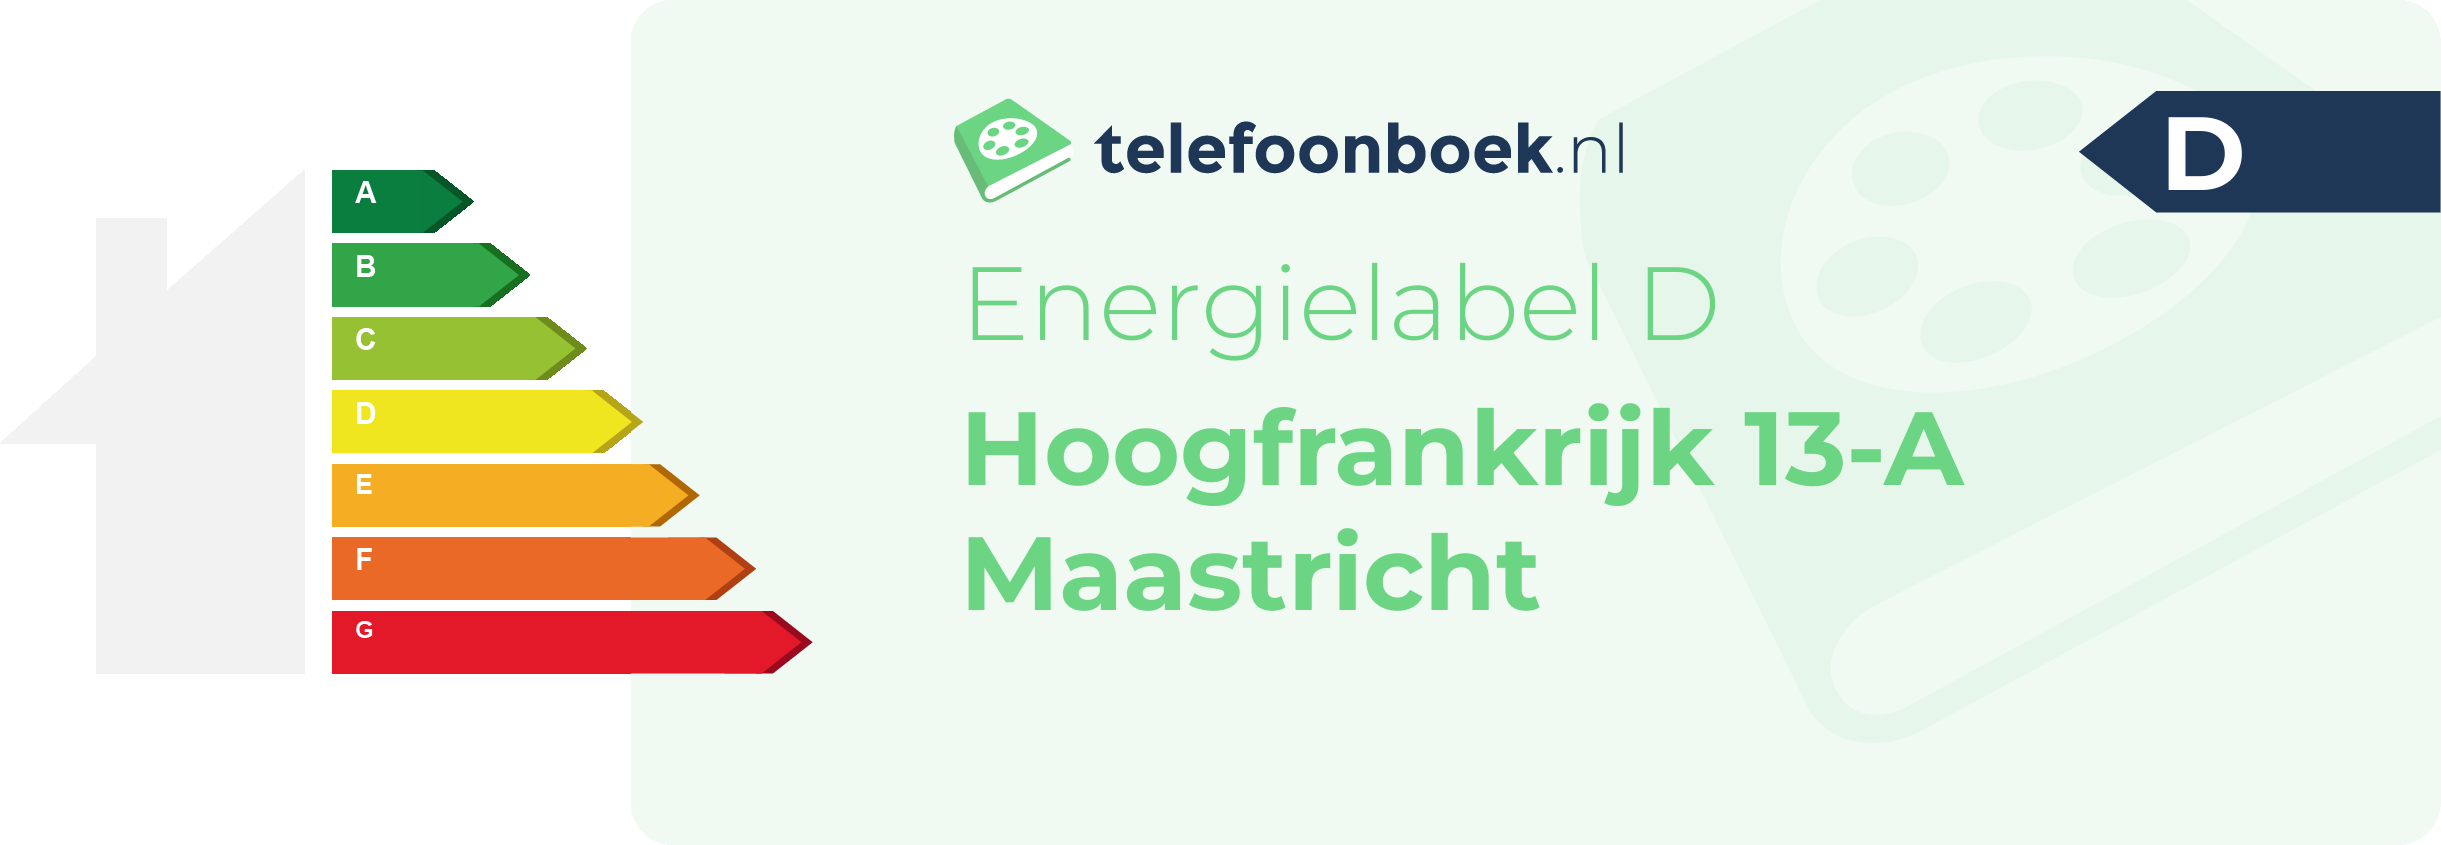 Energielabel Hoogfrankrijk 13-A Maastricht